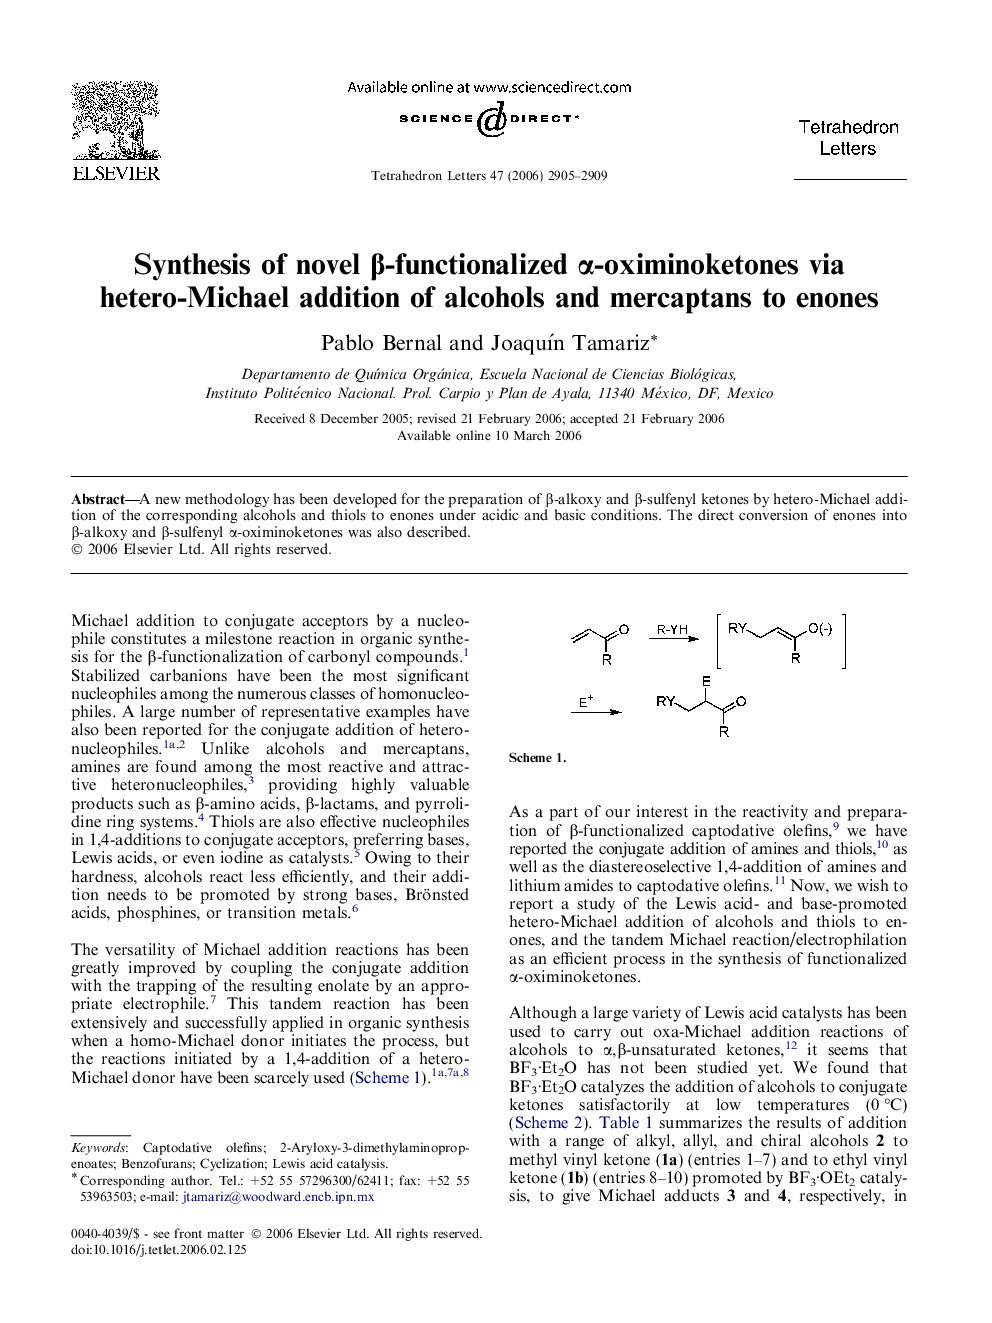 Synthesis of novel Î²-functionalized Î±-oximinoketones via hetero-Michael addition of alcohols and mercaptans to enones